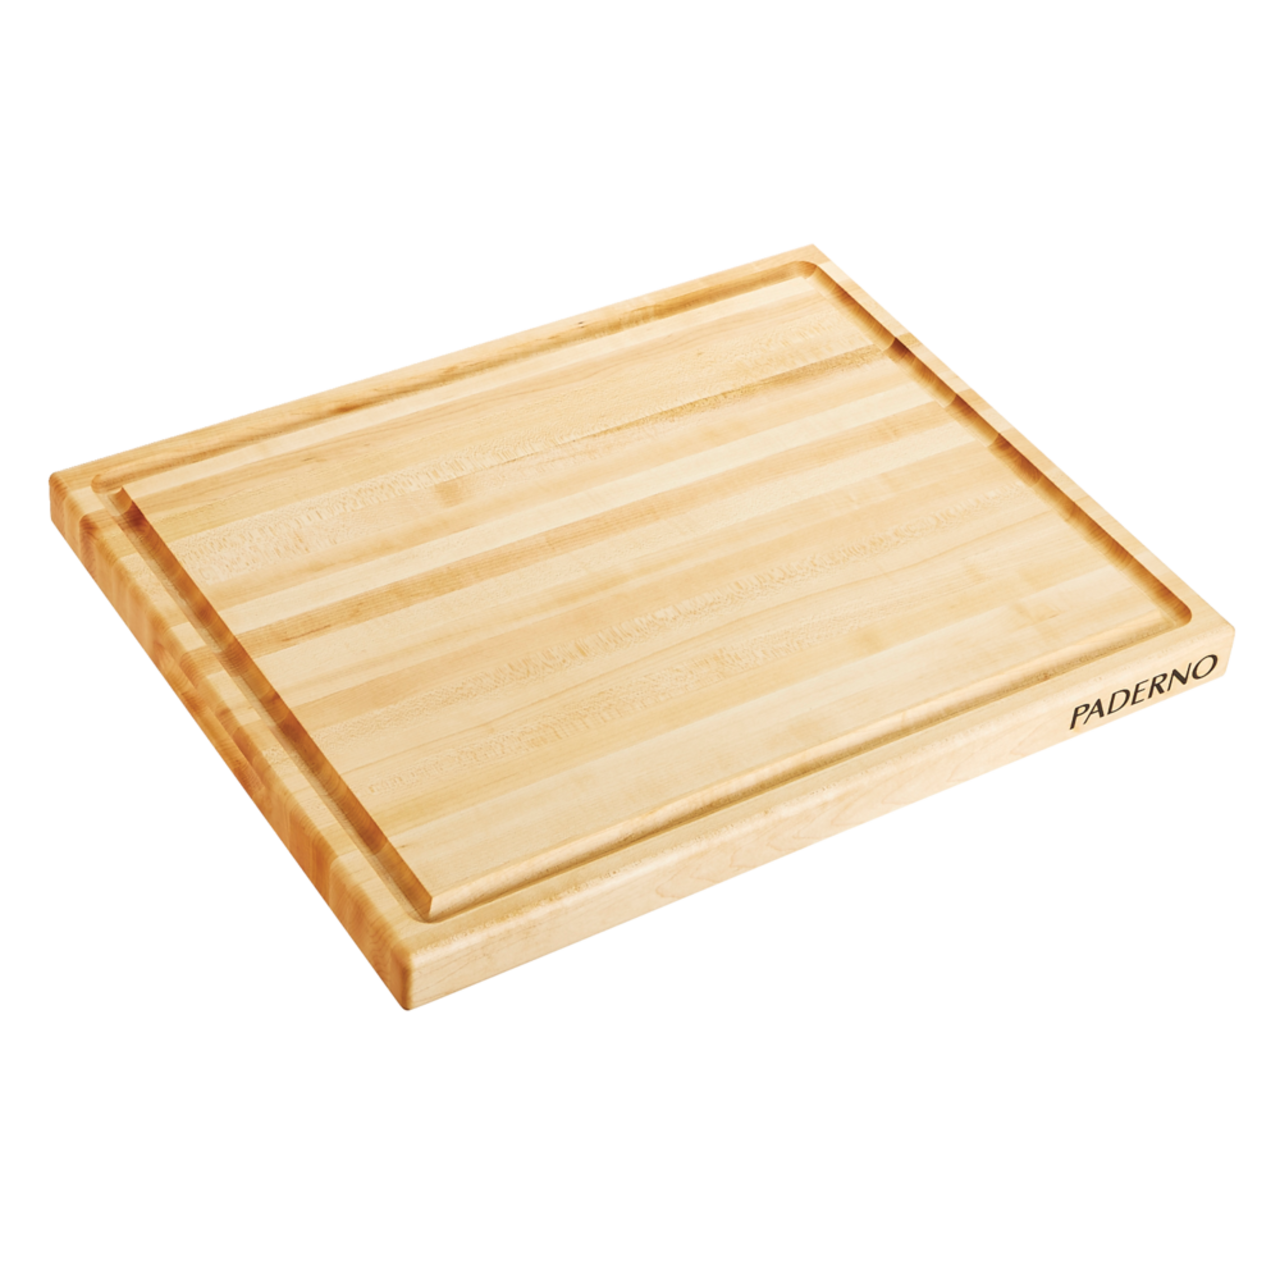 PADERNO Maple Hardwood Cutting Board, Grip Handles, 16-in x 20-in